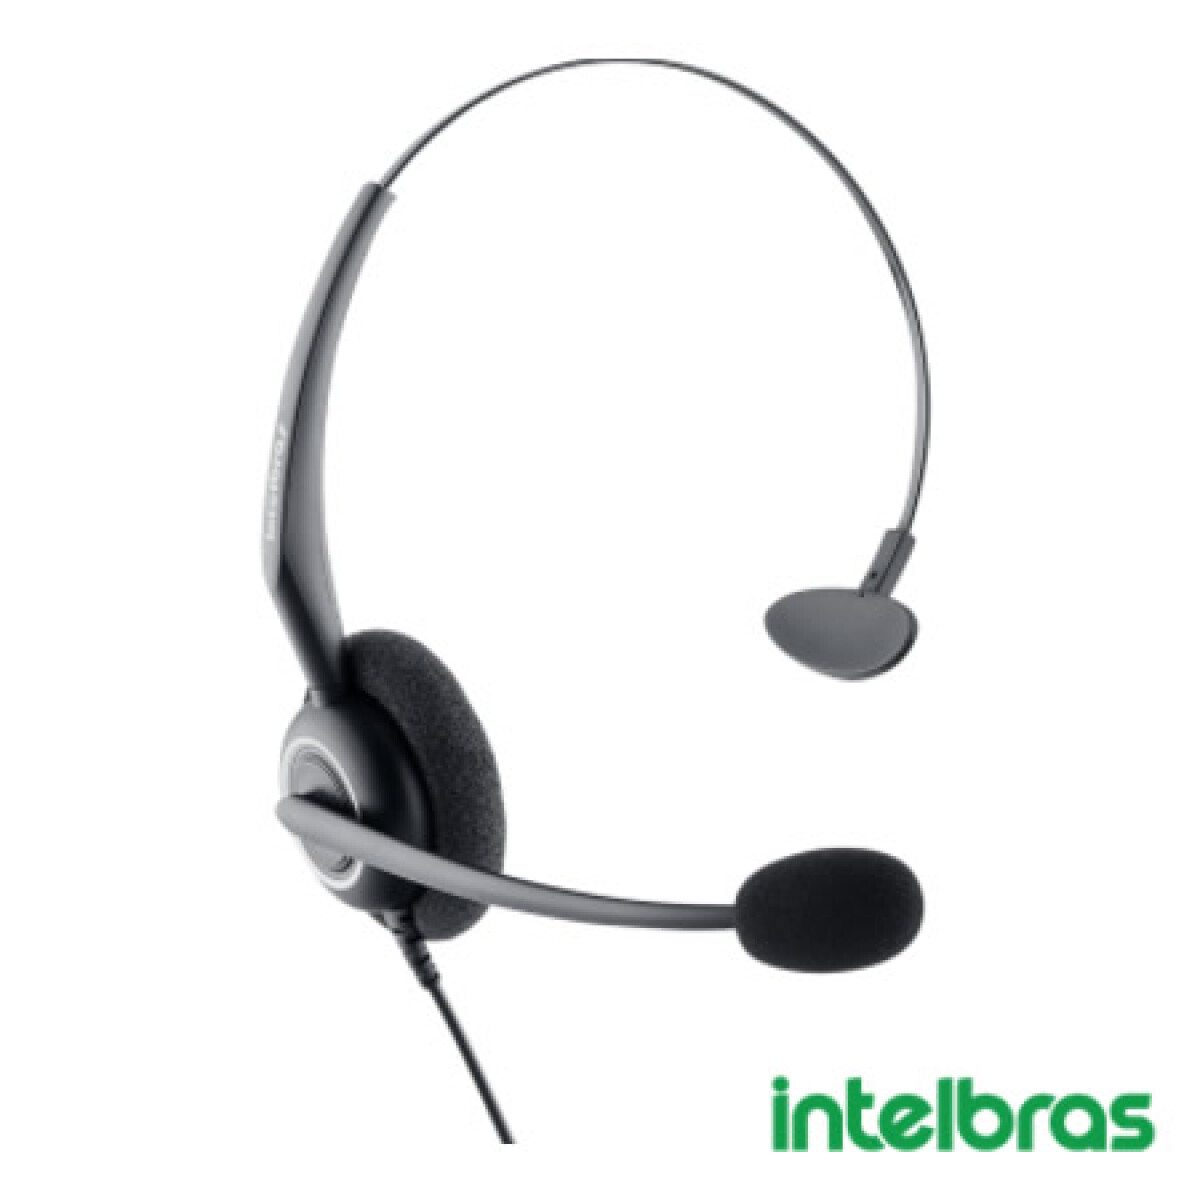 Telefonia | Call| Auricular (Headset)|CHS 55 (RJ9) Intelbras - 3916 